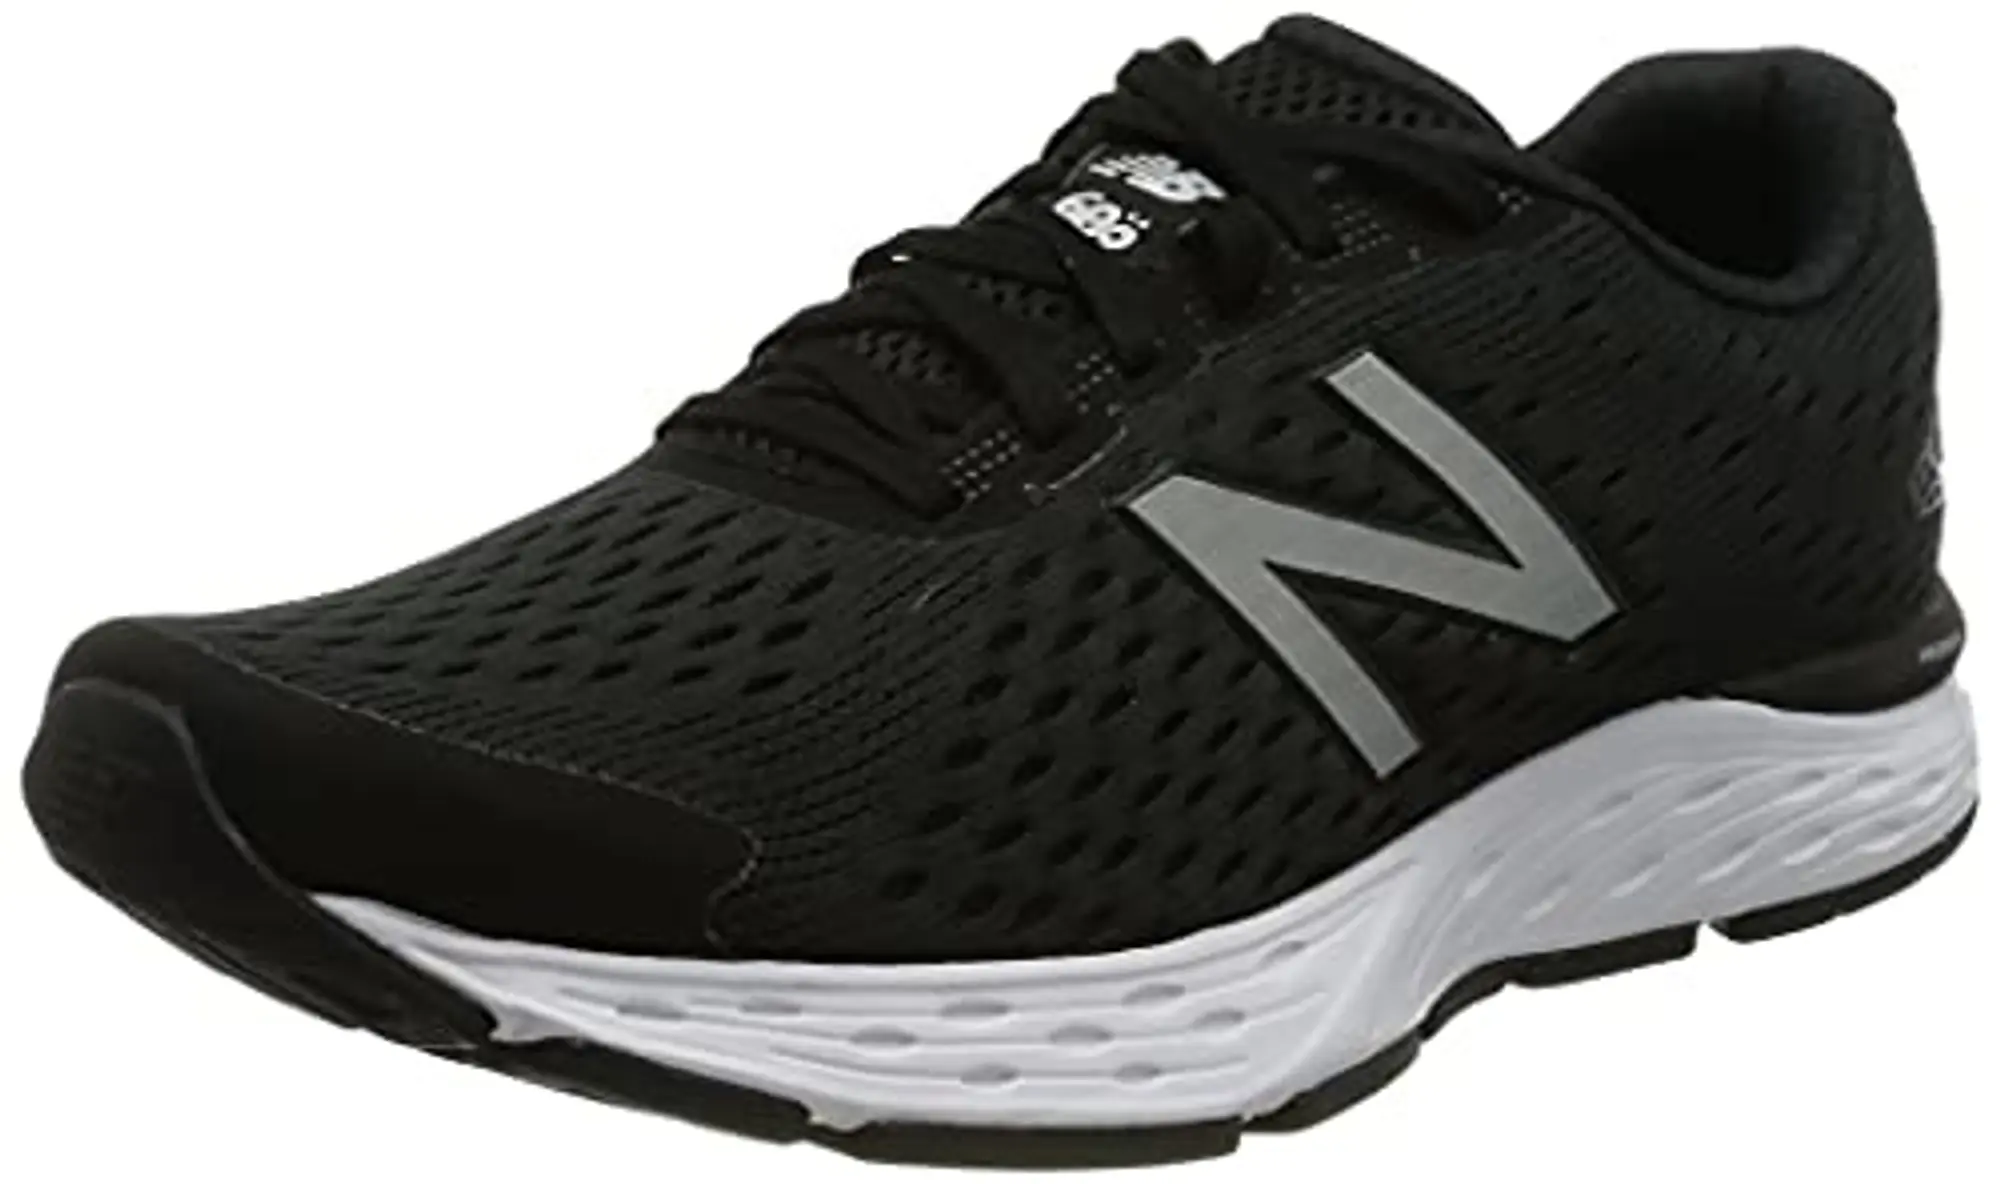 New Balance Mens 680v6 Running Shoes in Black Mesh